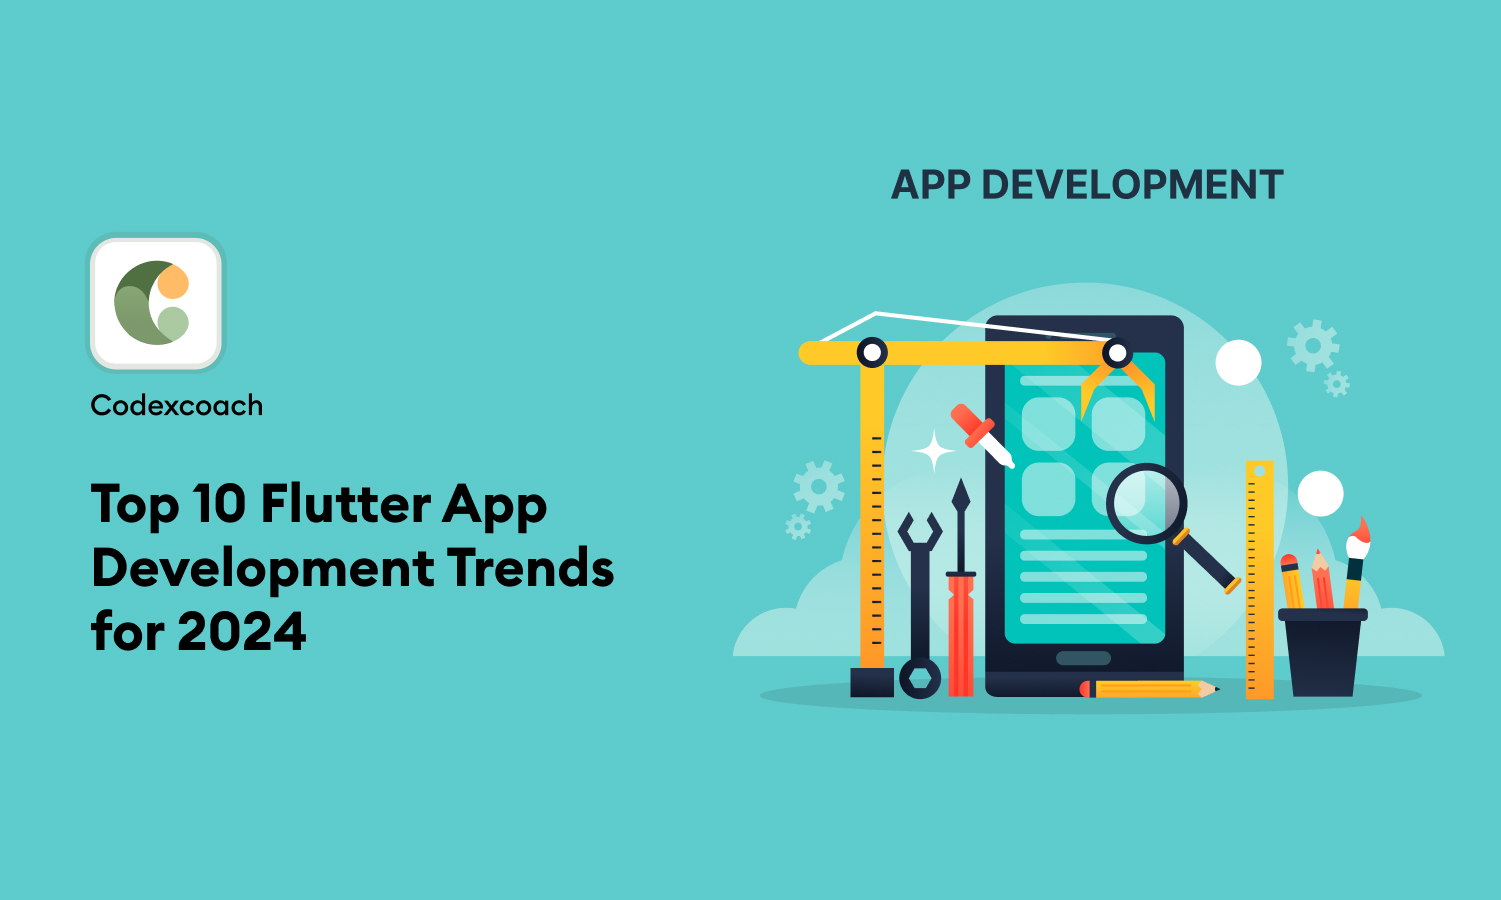 Top 10 Flutter App Development Trends for 2024